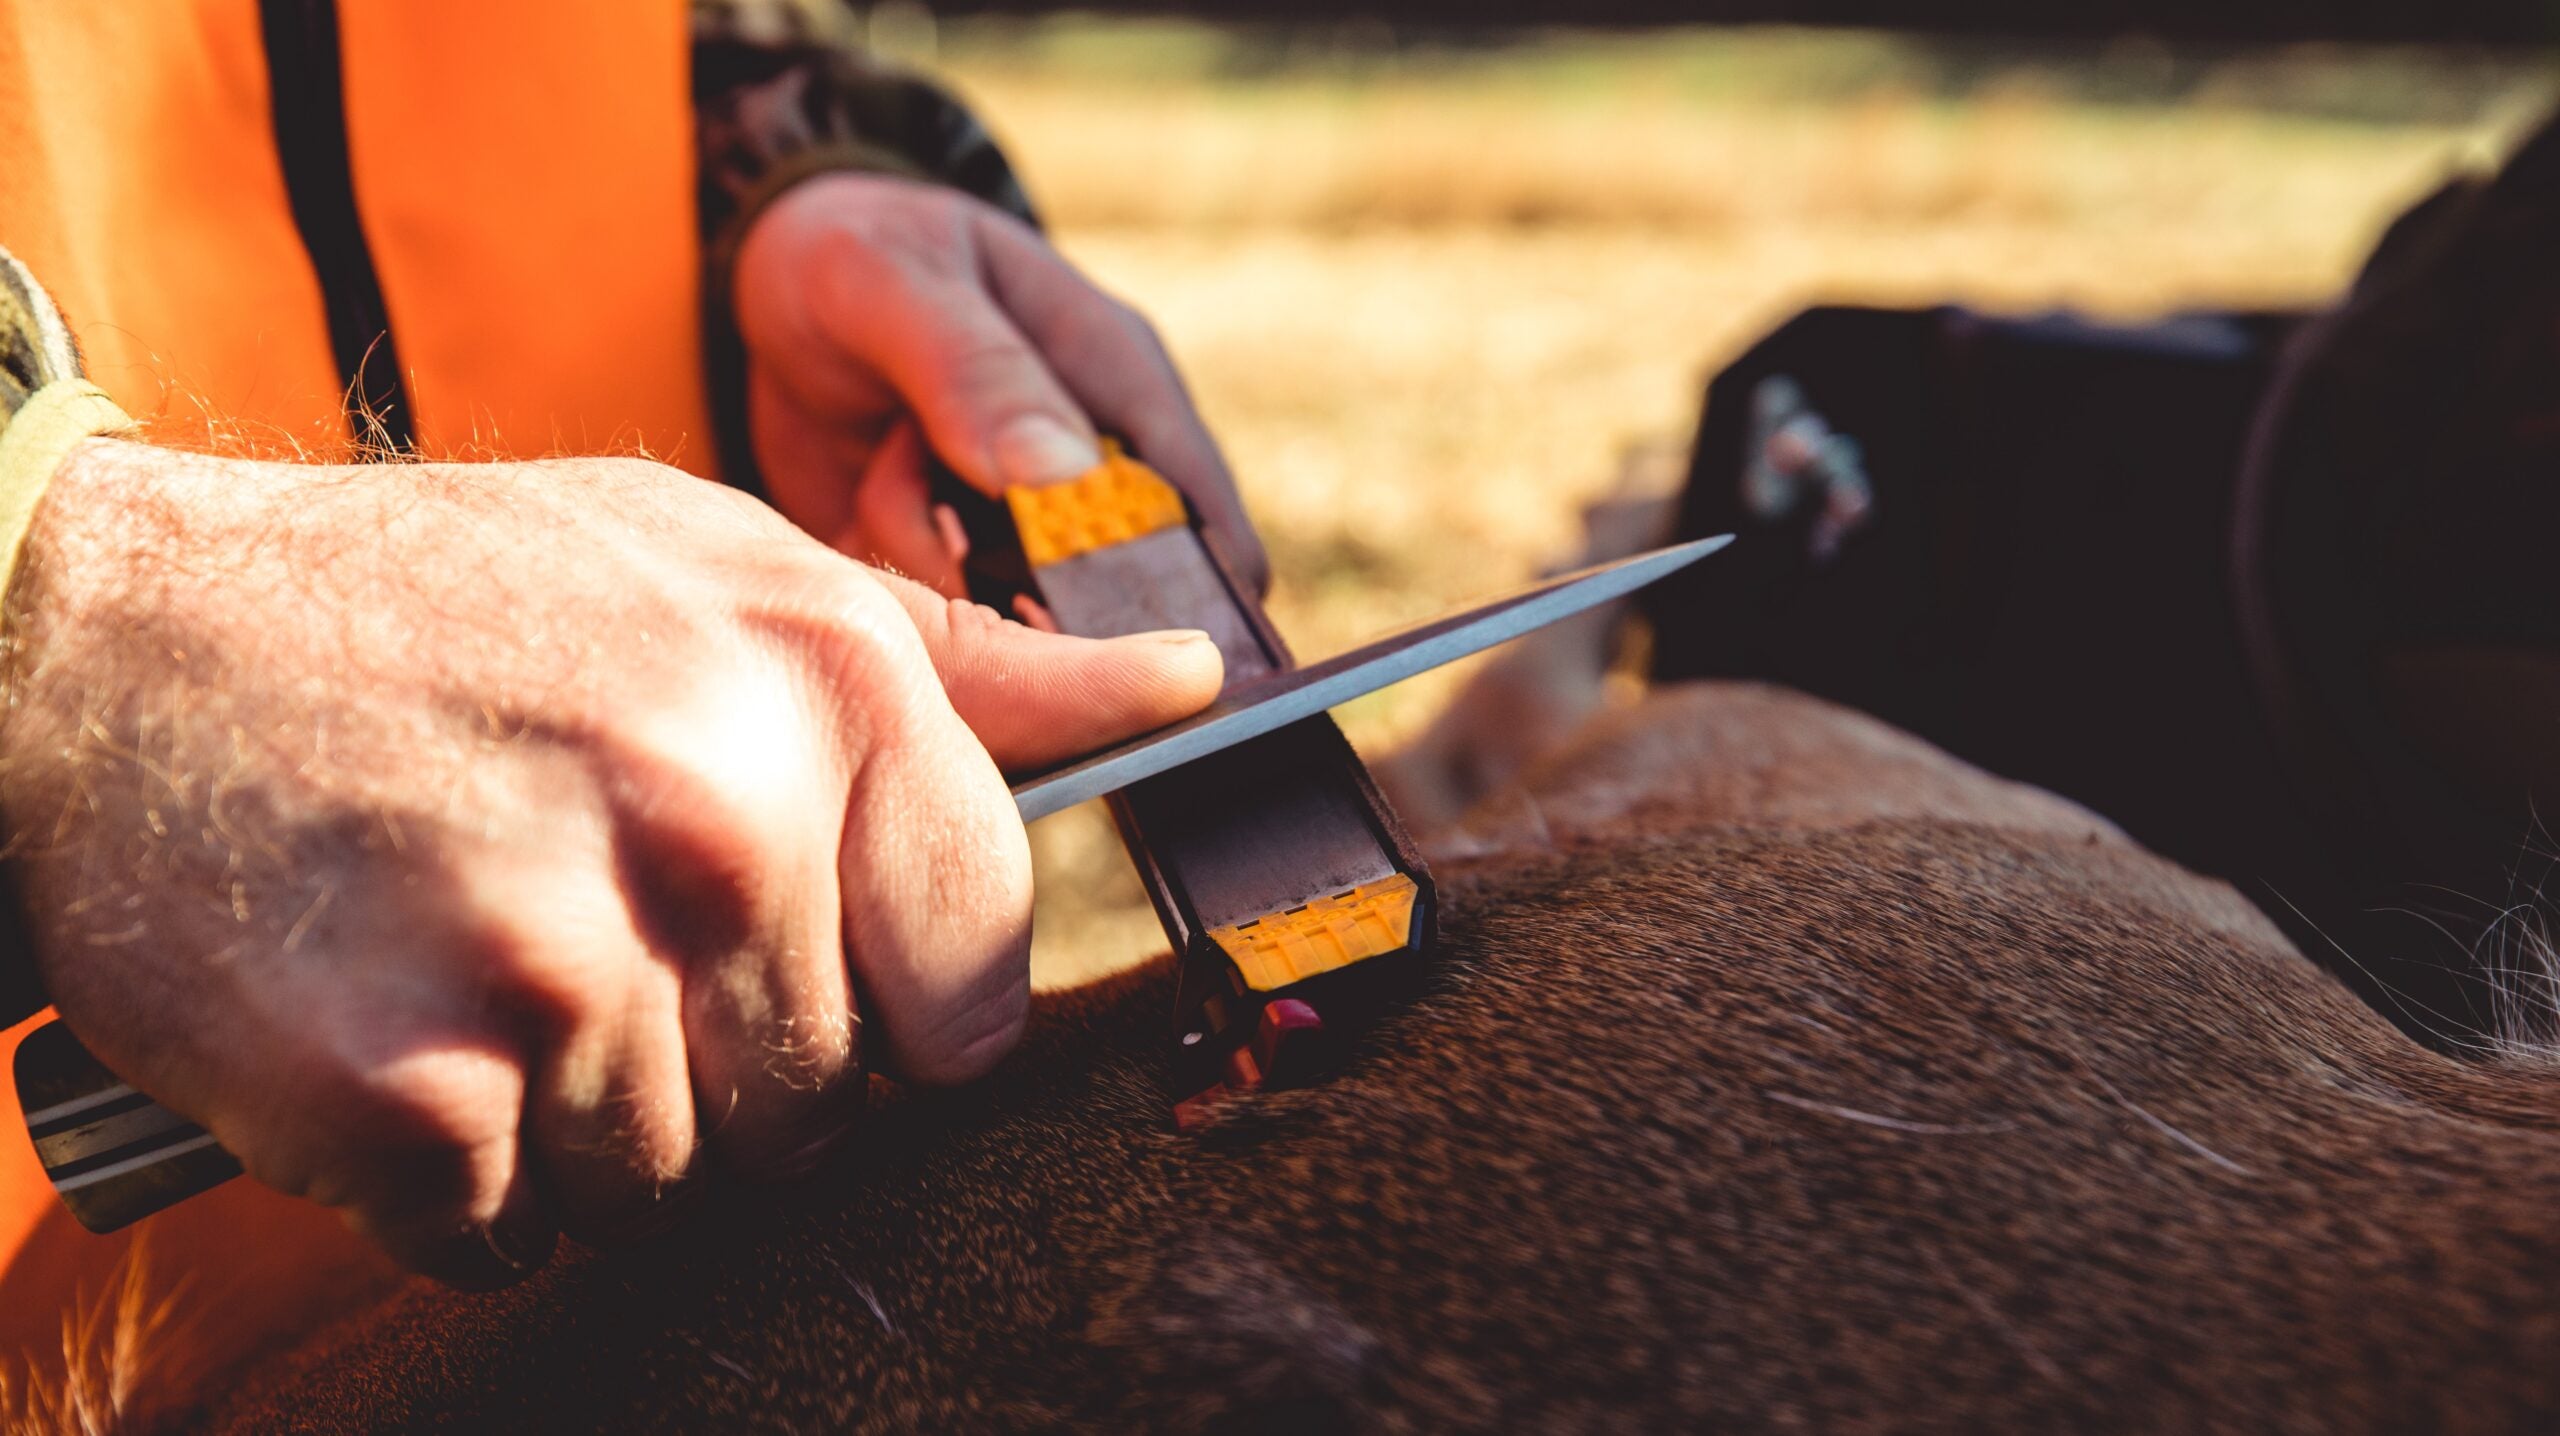 whitetail hunting sharpening knife on work sharp tools guided field sharpener